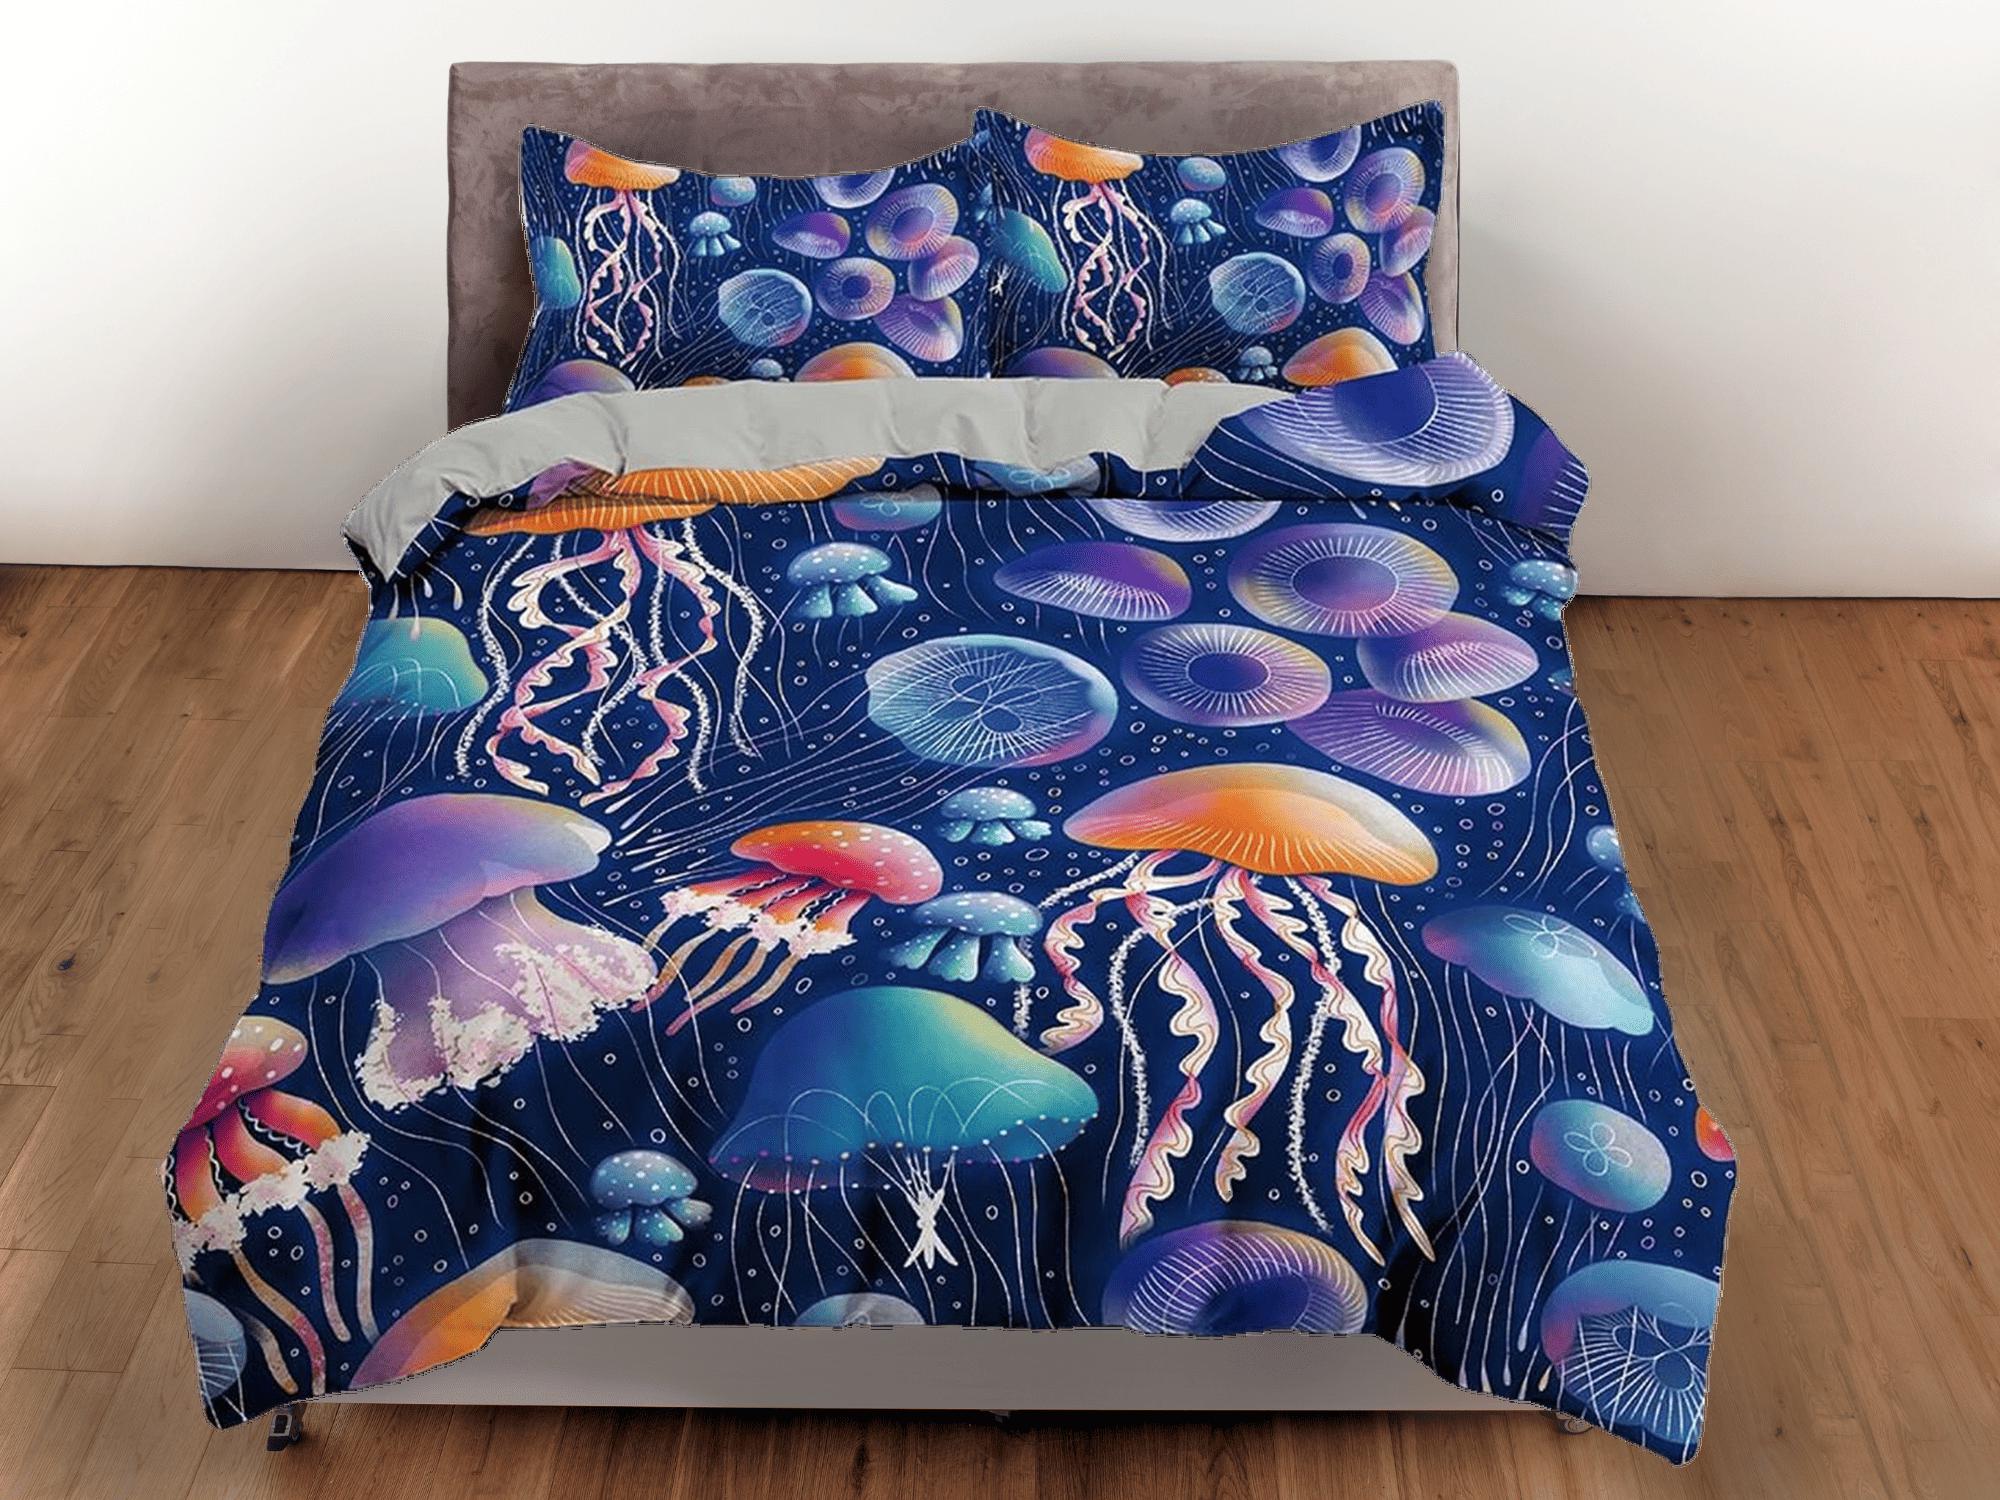 daintyduvet Assorted jellyfish bedding colorful duvet cover, ocean blush sea animal bedding set full king queen twin crib toddler, dorm bedding gift